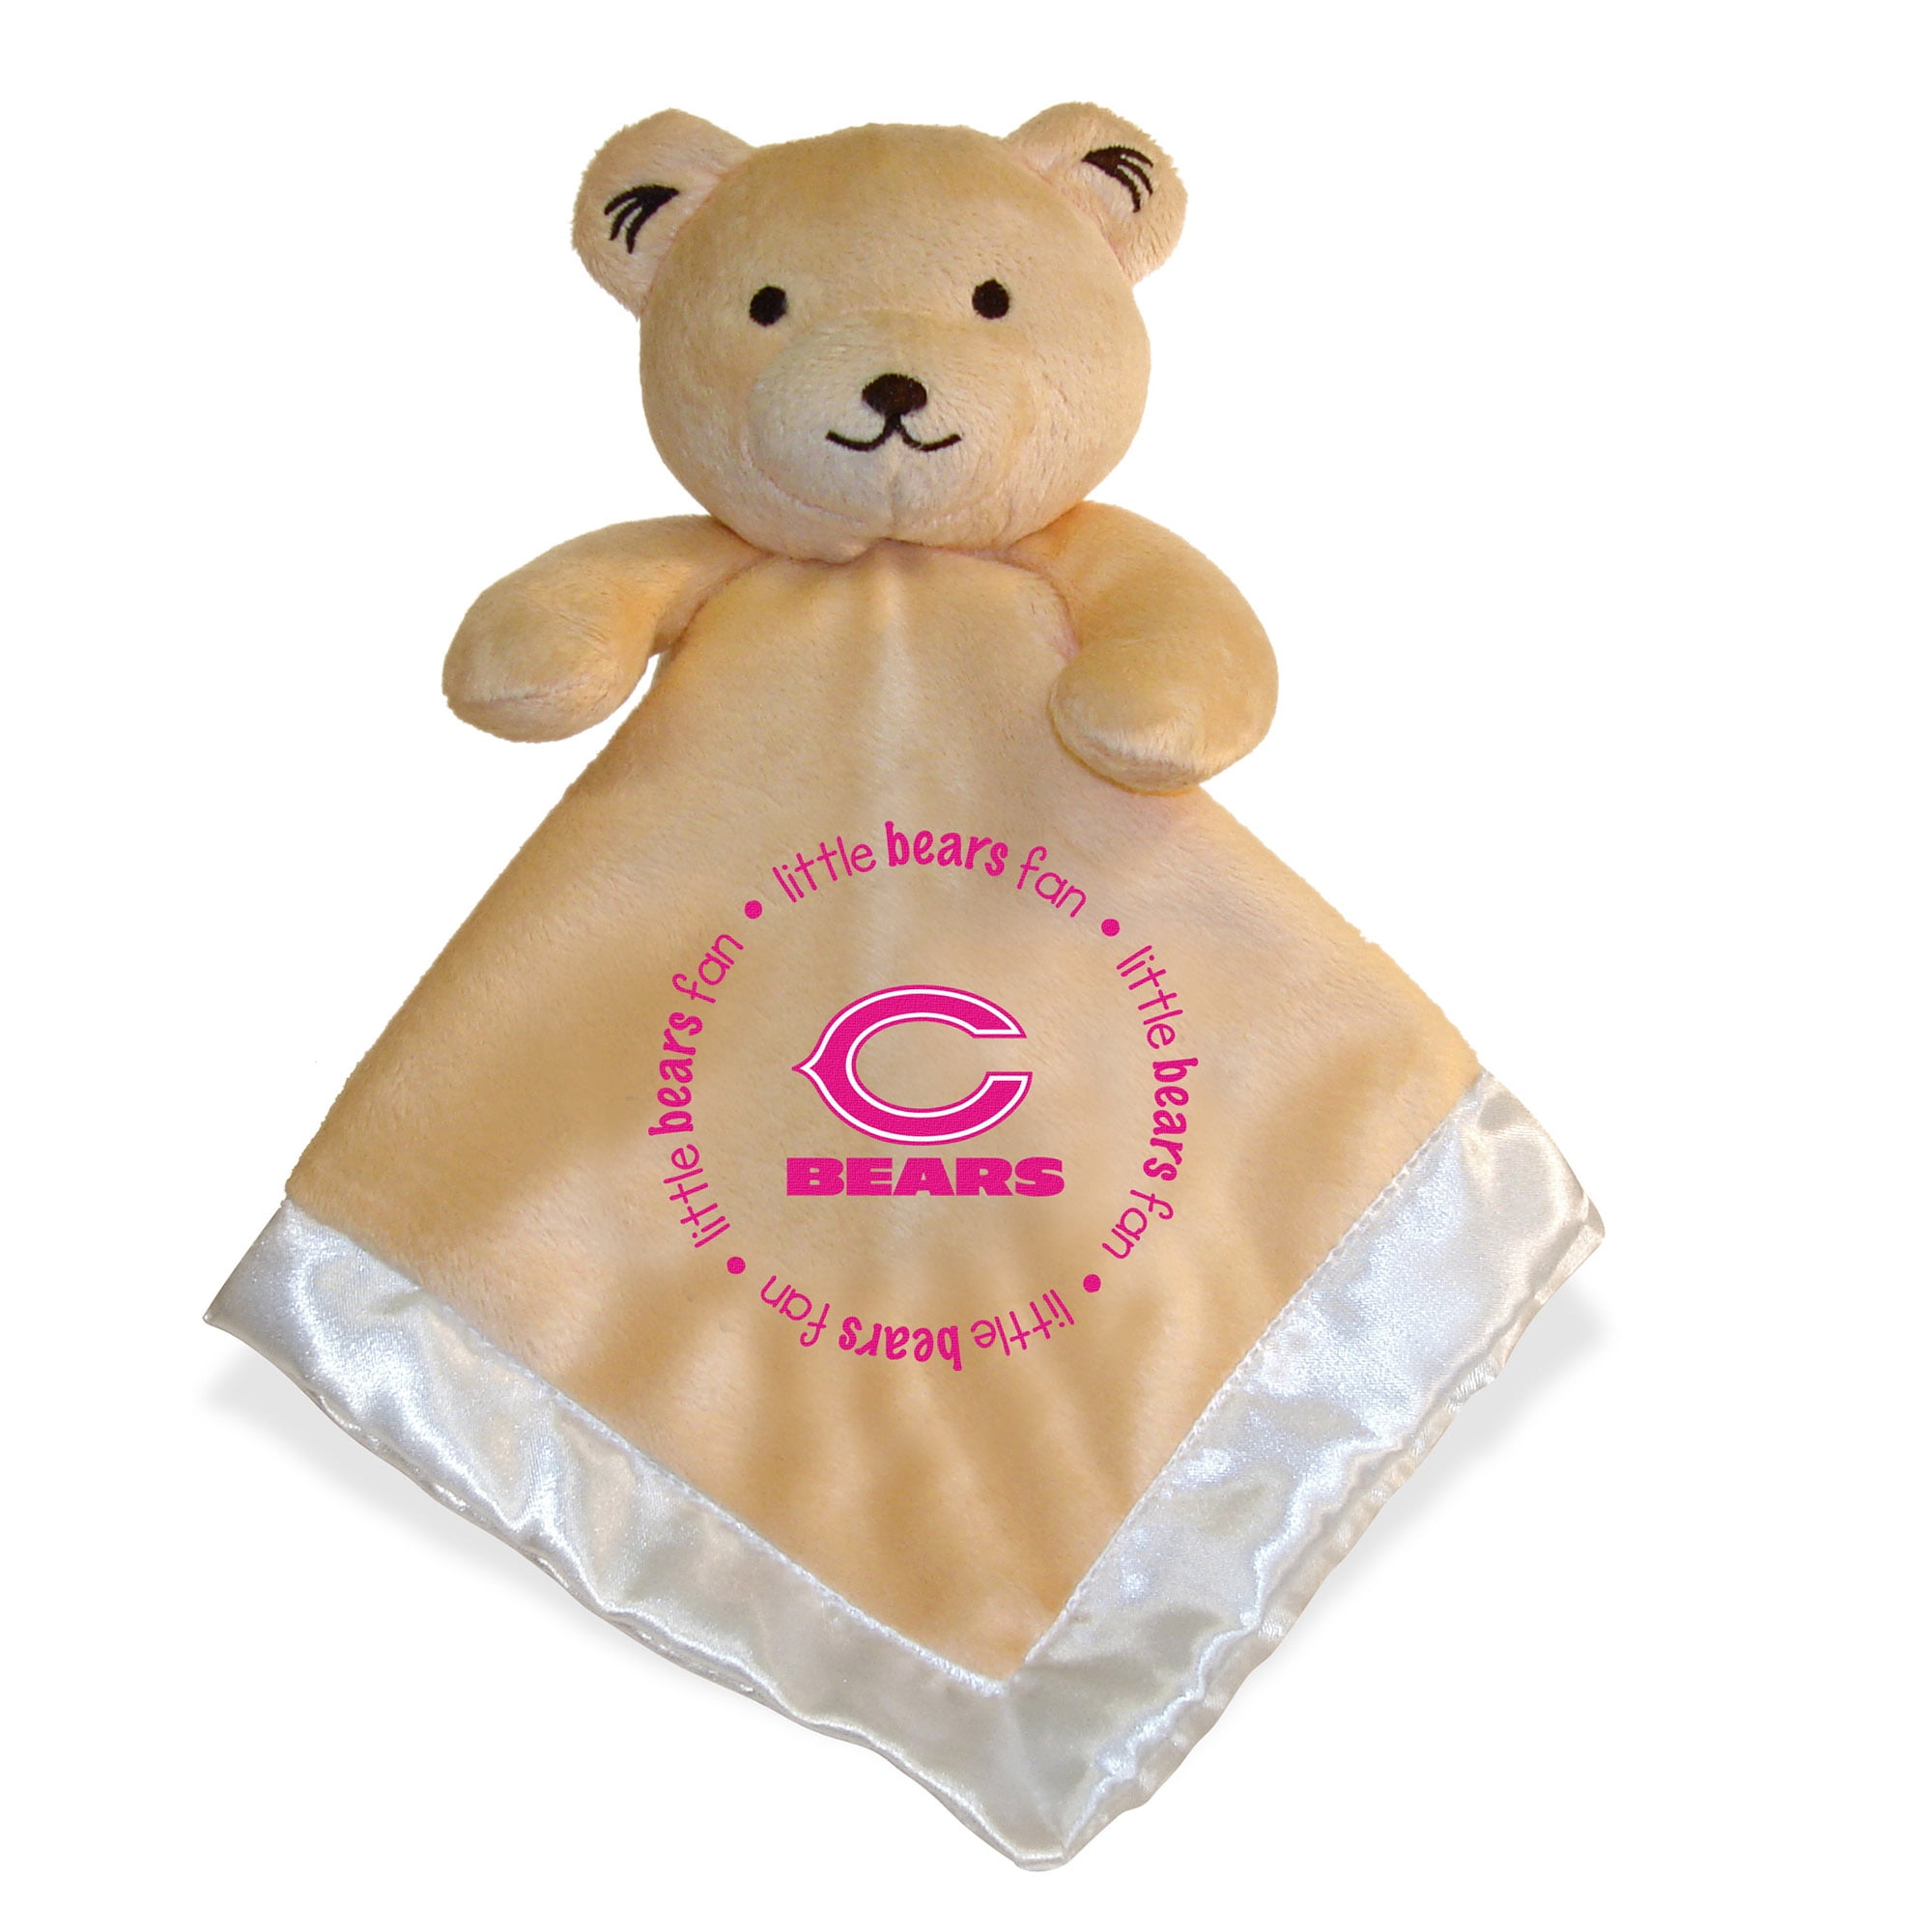 pink chicago bears logo